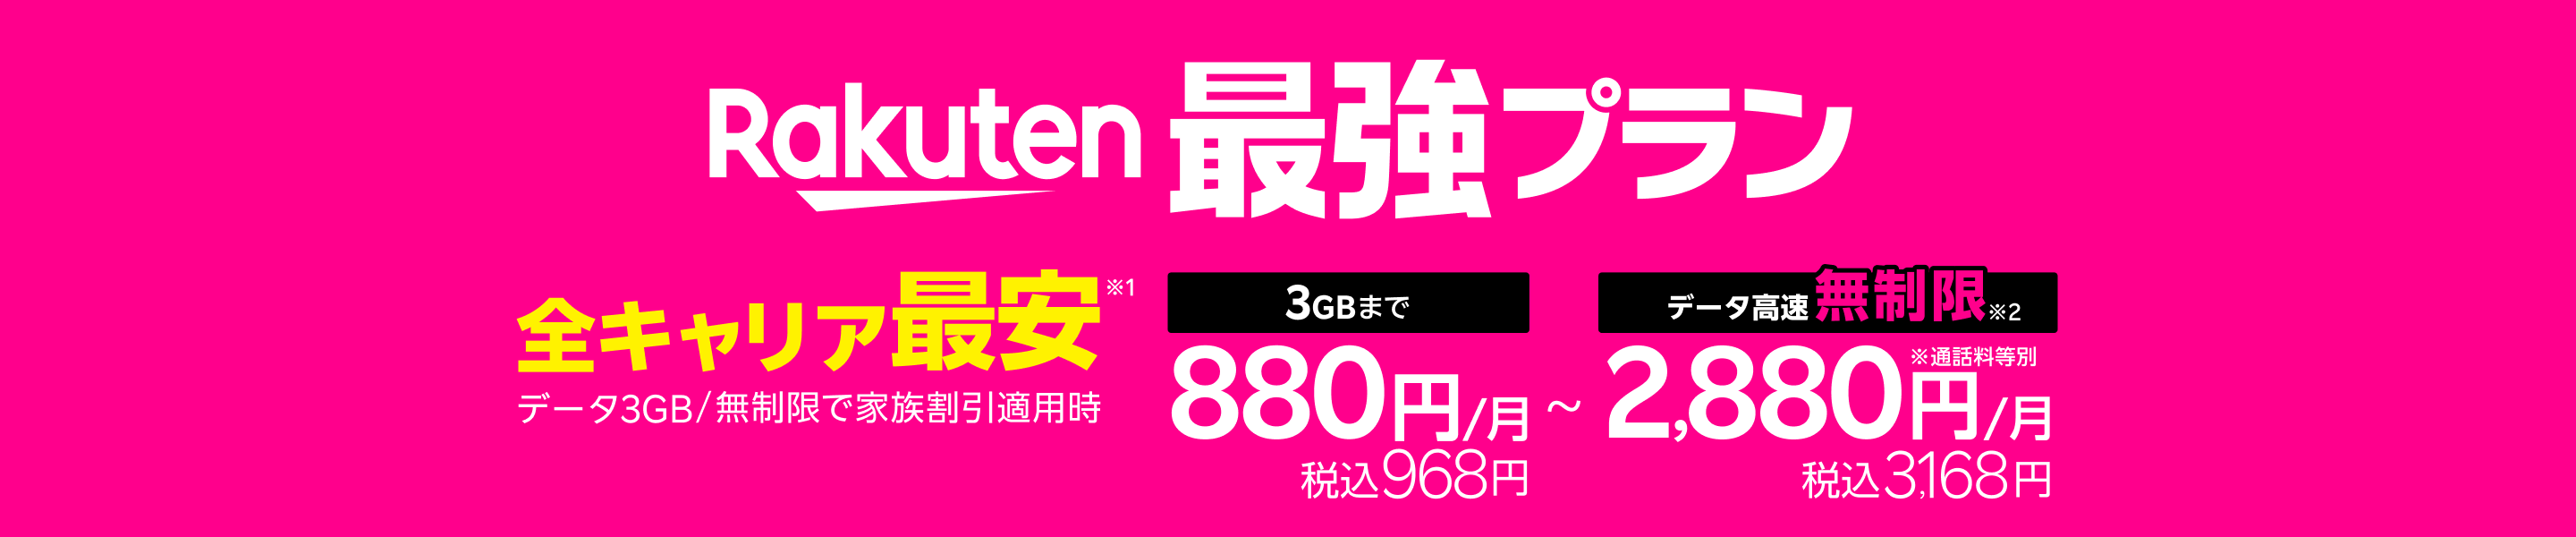 「Rakuten最強プラン」はデータ3GB/無制限で家族割引適用時、全キャリアで最安！※1 3GBまで880円/月（税込968円）、データ高速無制限※2 なら2,880円/月（税込3,168円）